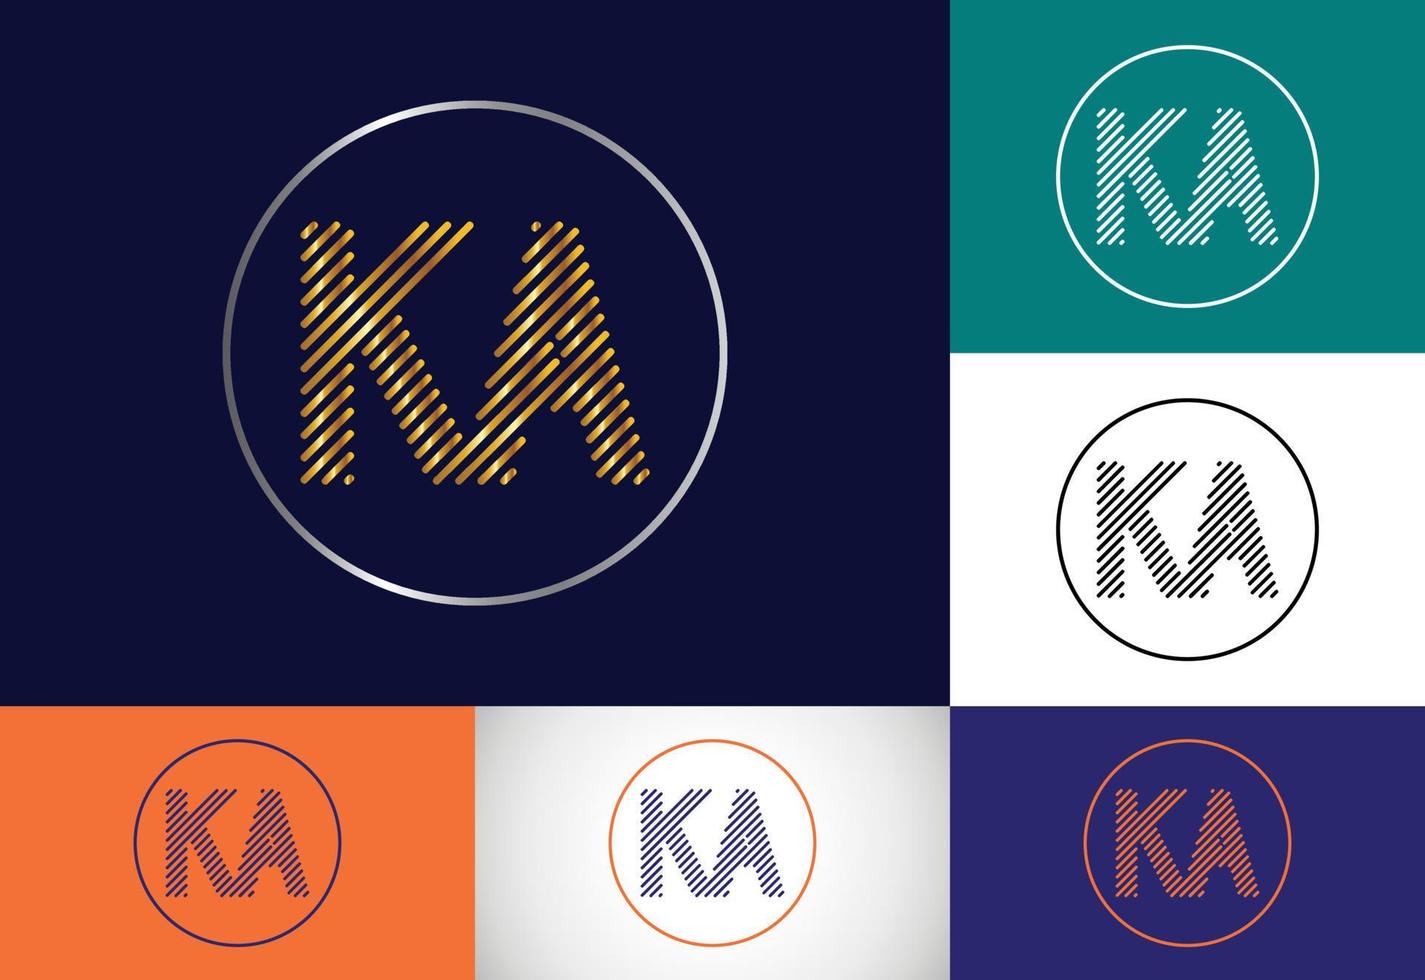 plantilla de vector de diseño de logotipo de letra de monograma inicial ka. diseño de logotipo de letra ka